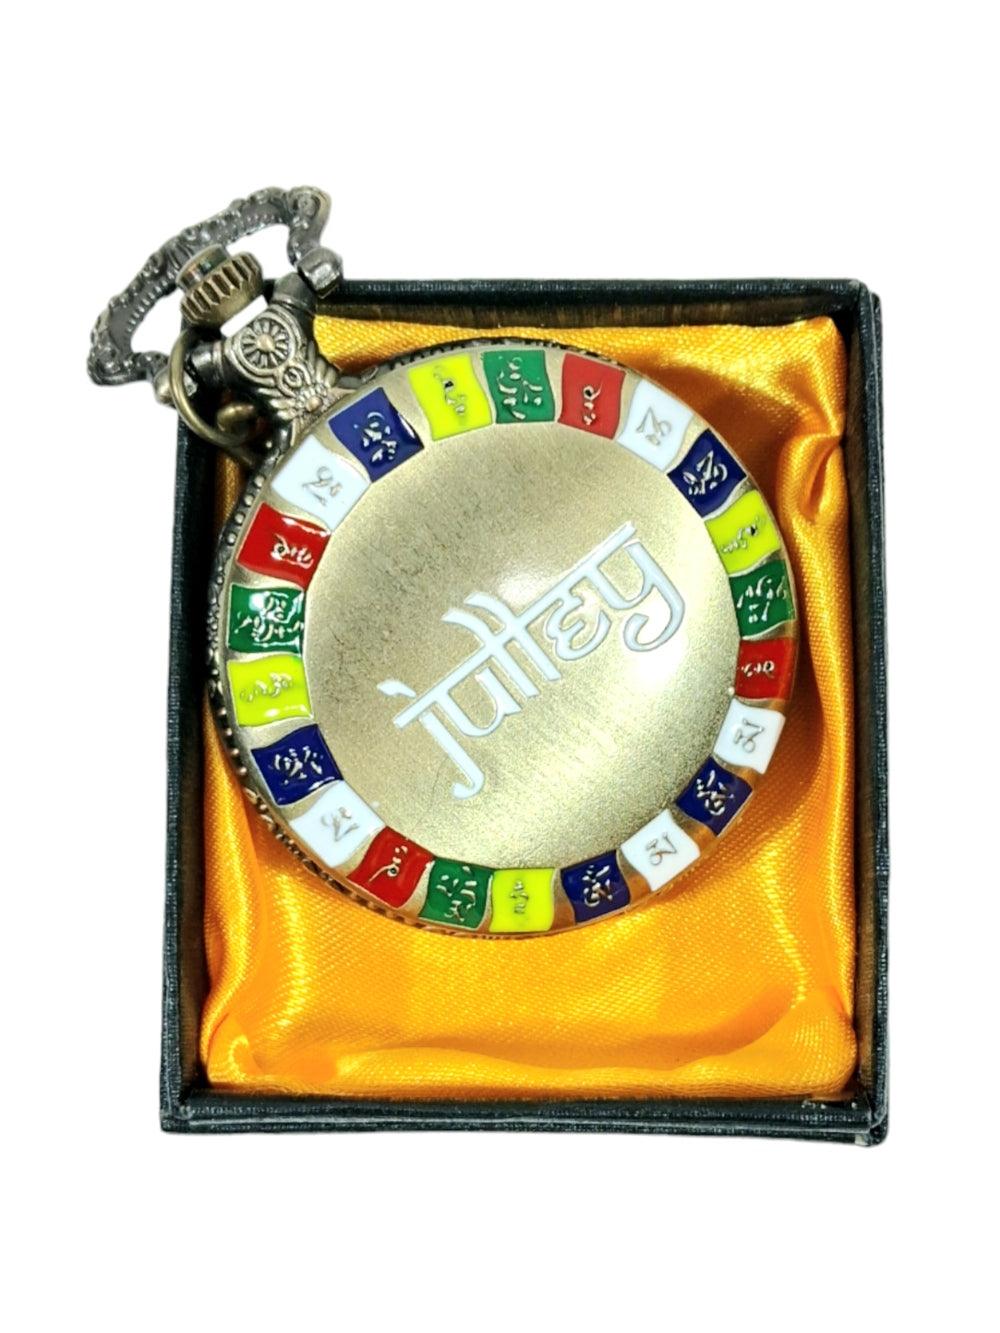 Colour Antique Watch | Metal Keychain | Pocket Watch